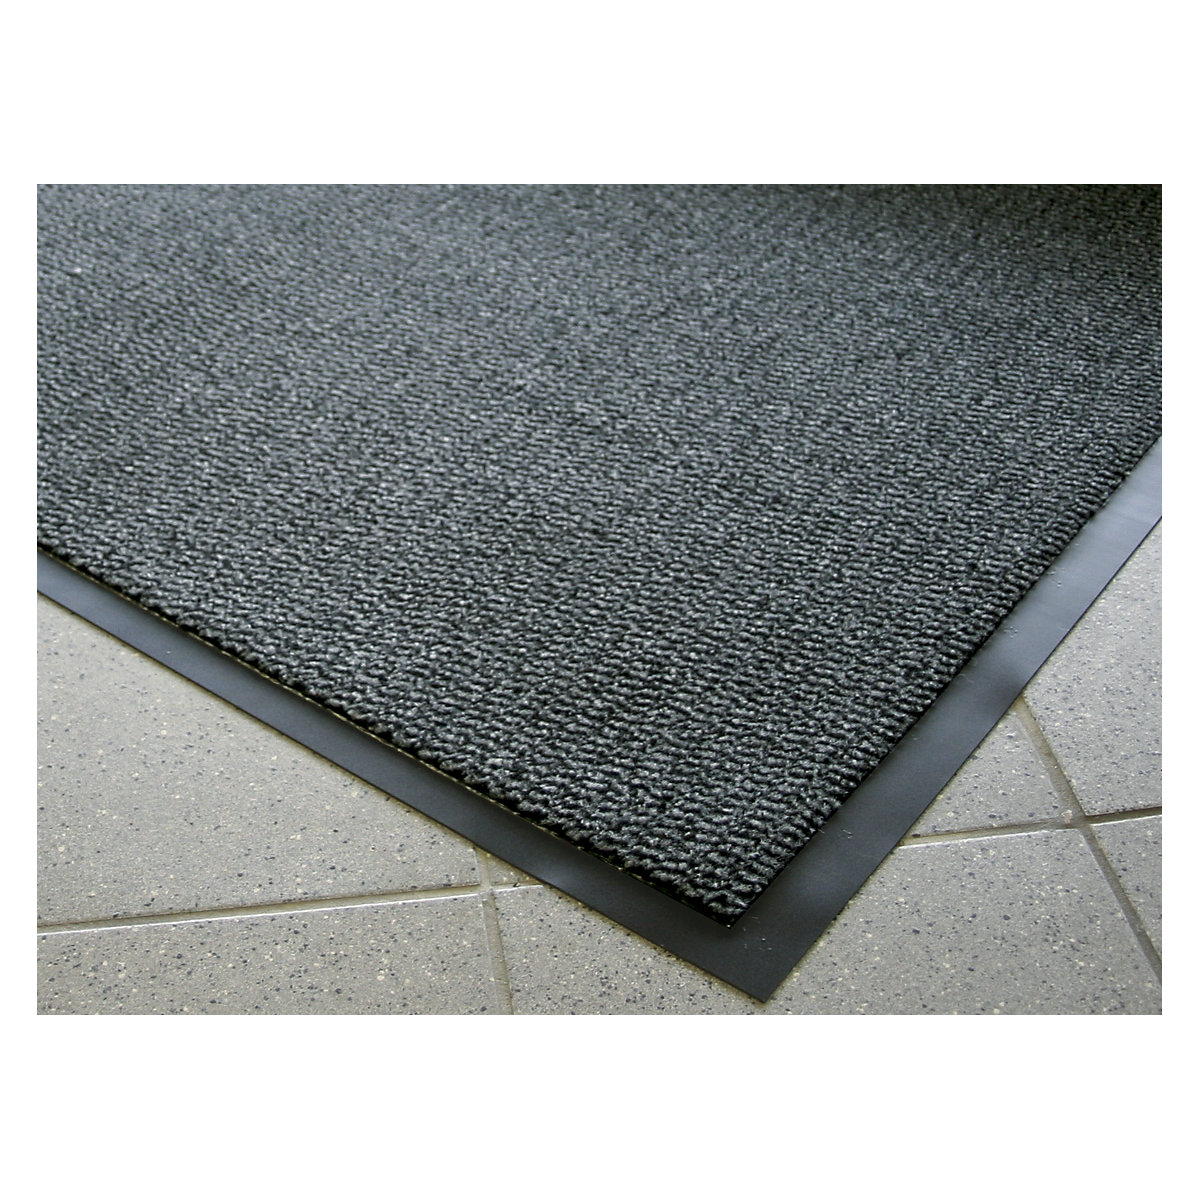 Entrance matting for indoor use, polypropylene pile, LxW 900 x 600 mm, pack of 2, black / metallic